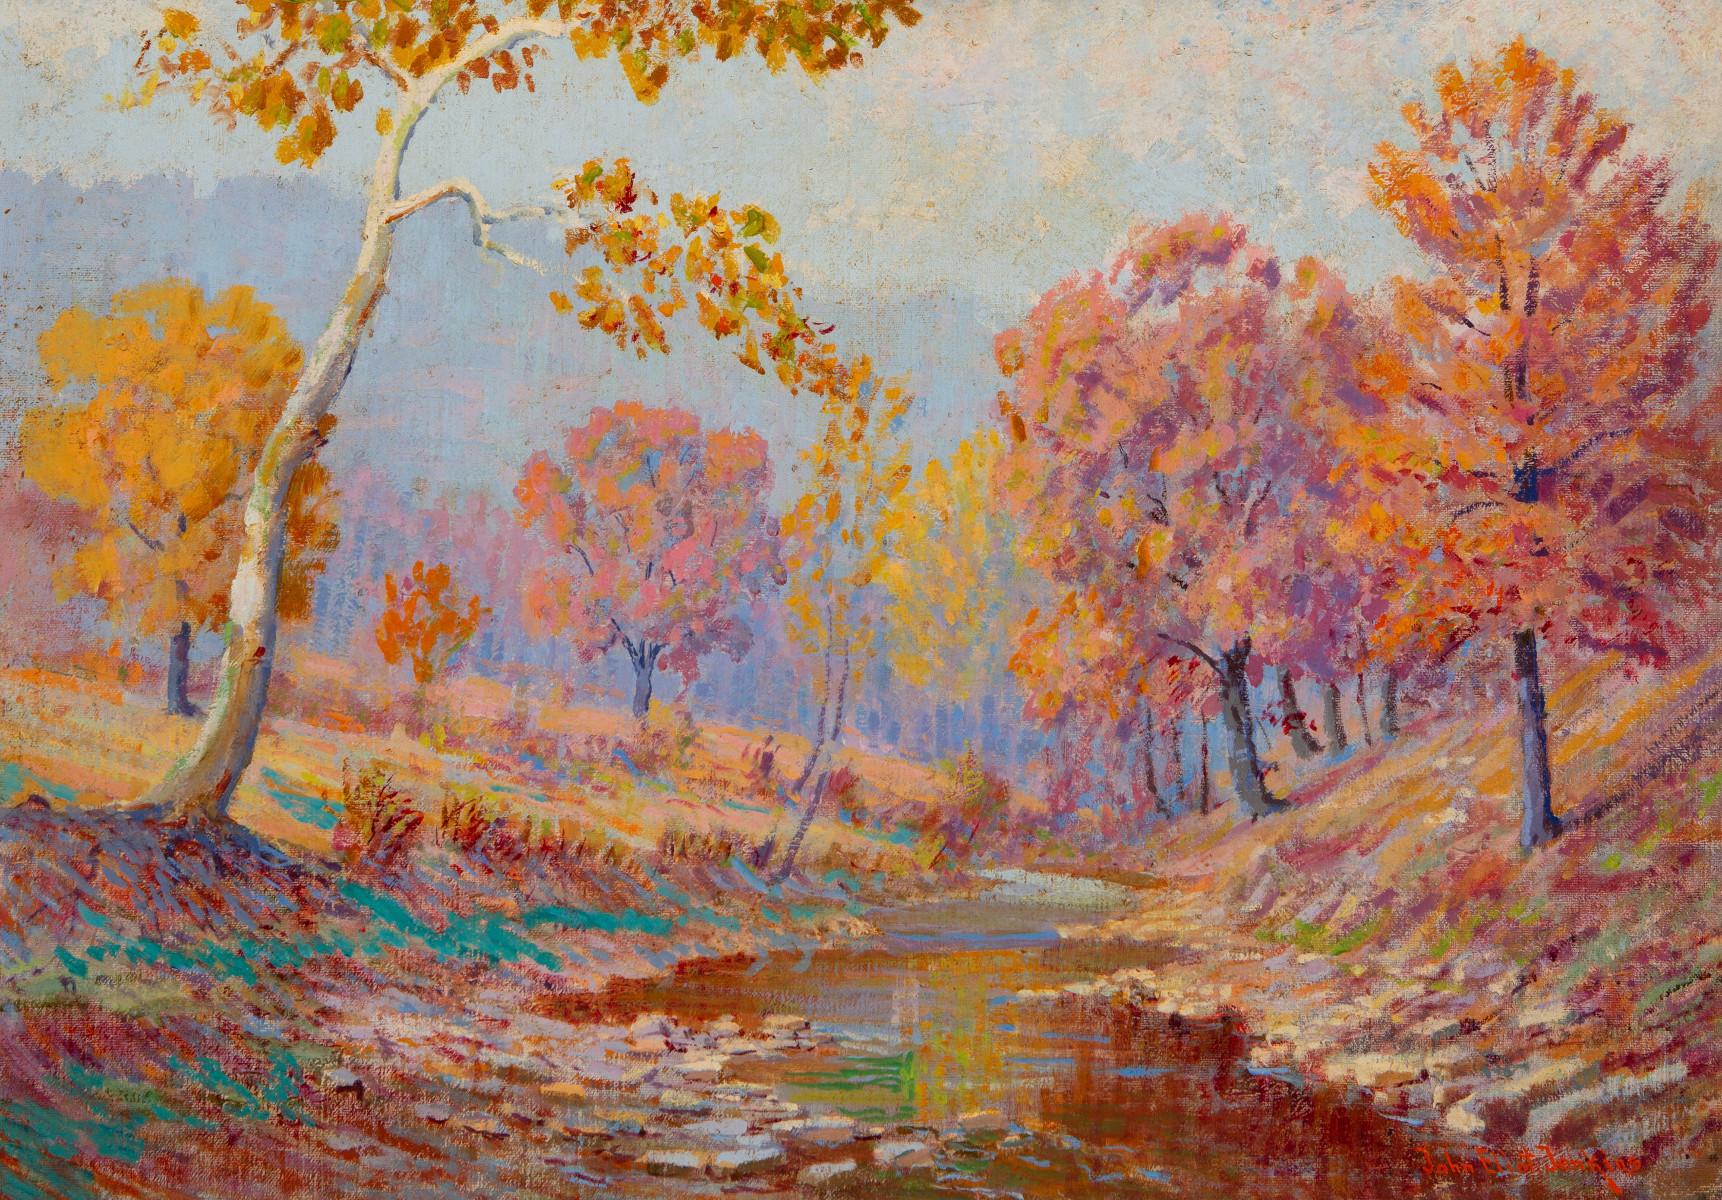 John Elliot Jenkins Landscape Painting - "Texas Creek"  Most likely in or near Austin Texas